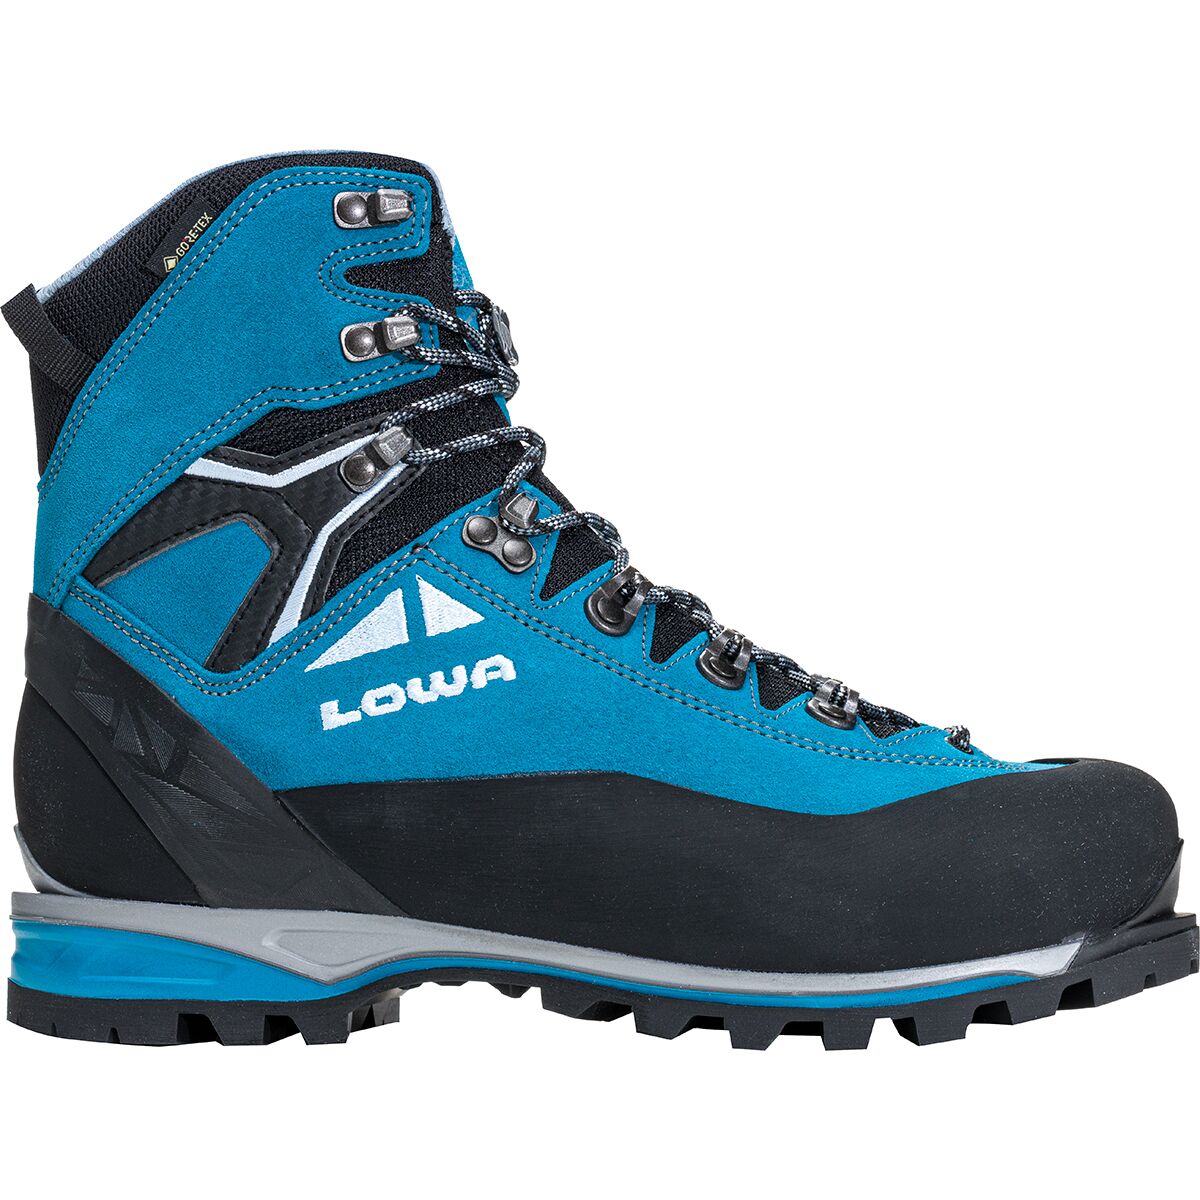 Lowa Alpine Expert II GTX Mountaineering Boot - Women's